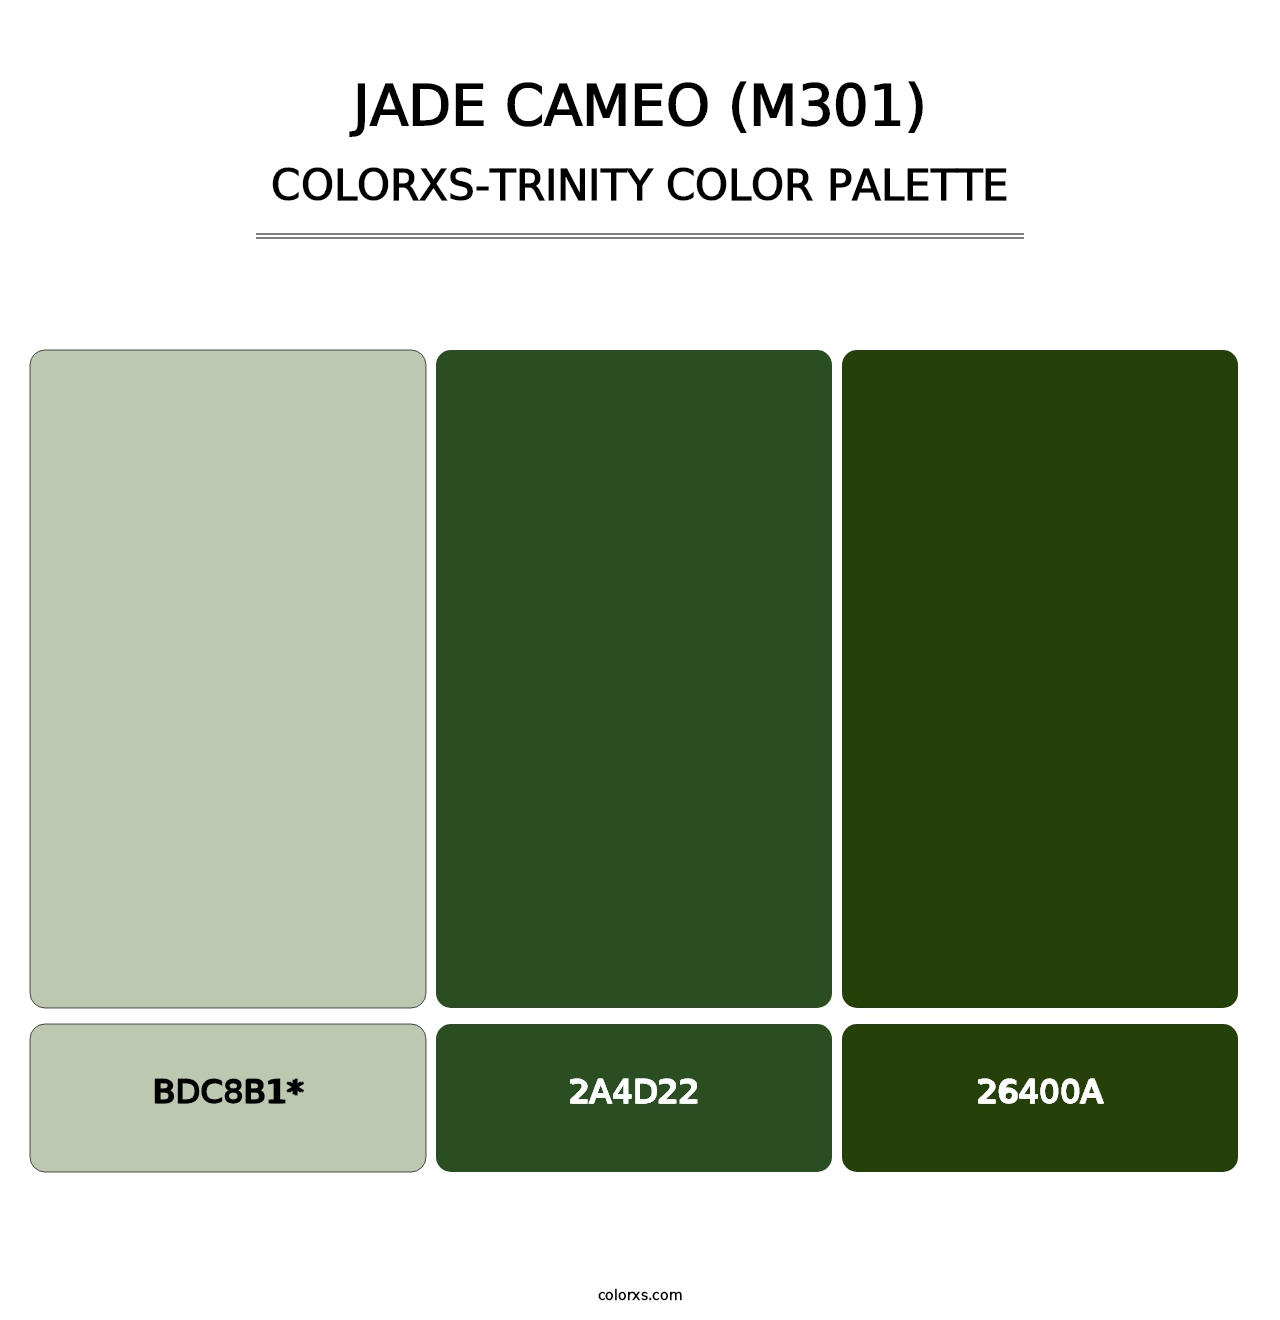 Jade Cameo (M301) - Colorxs Trinity Palette